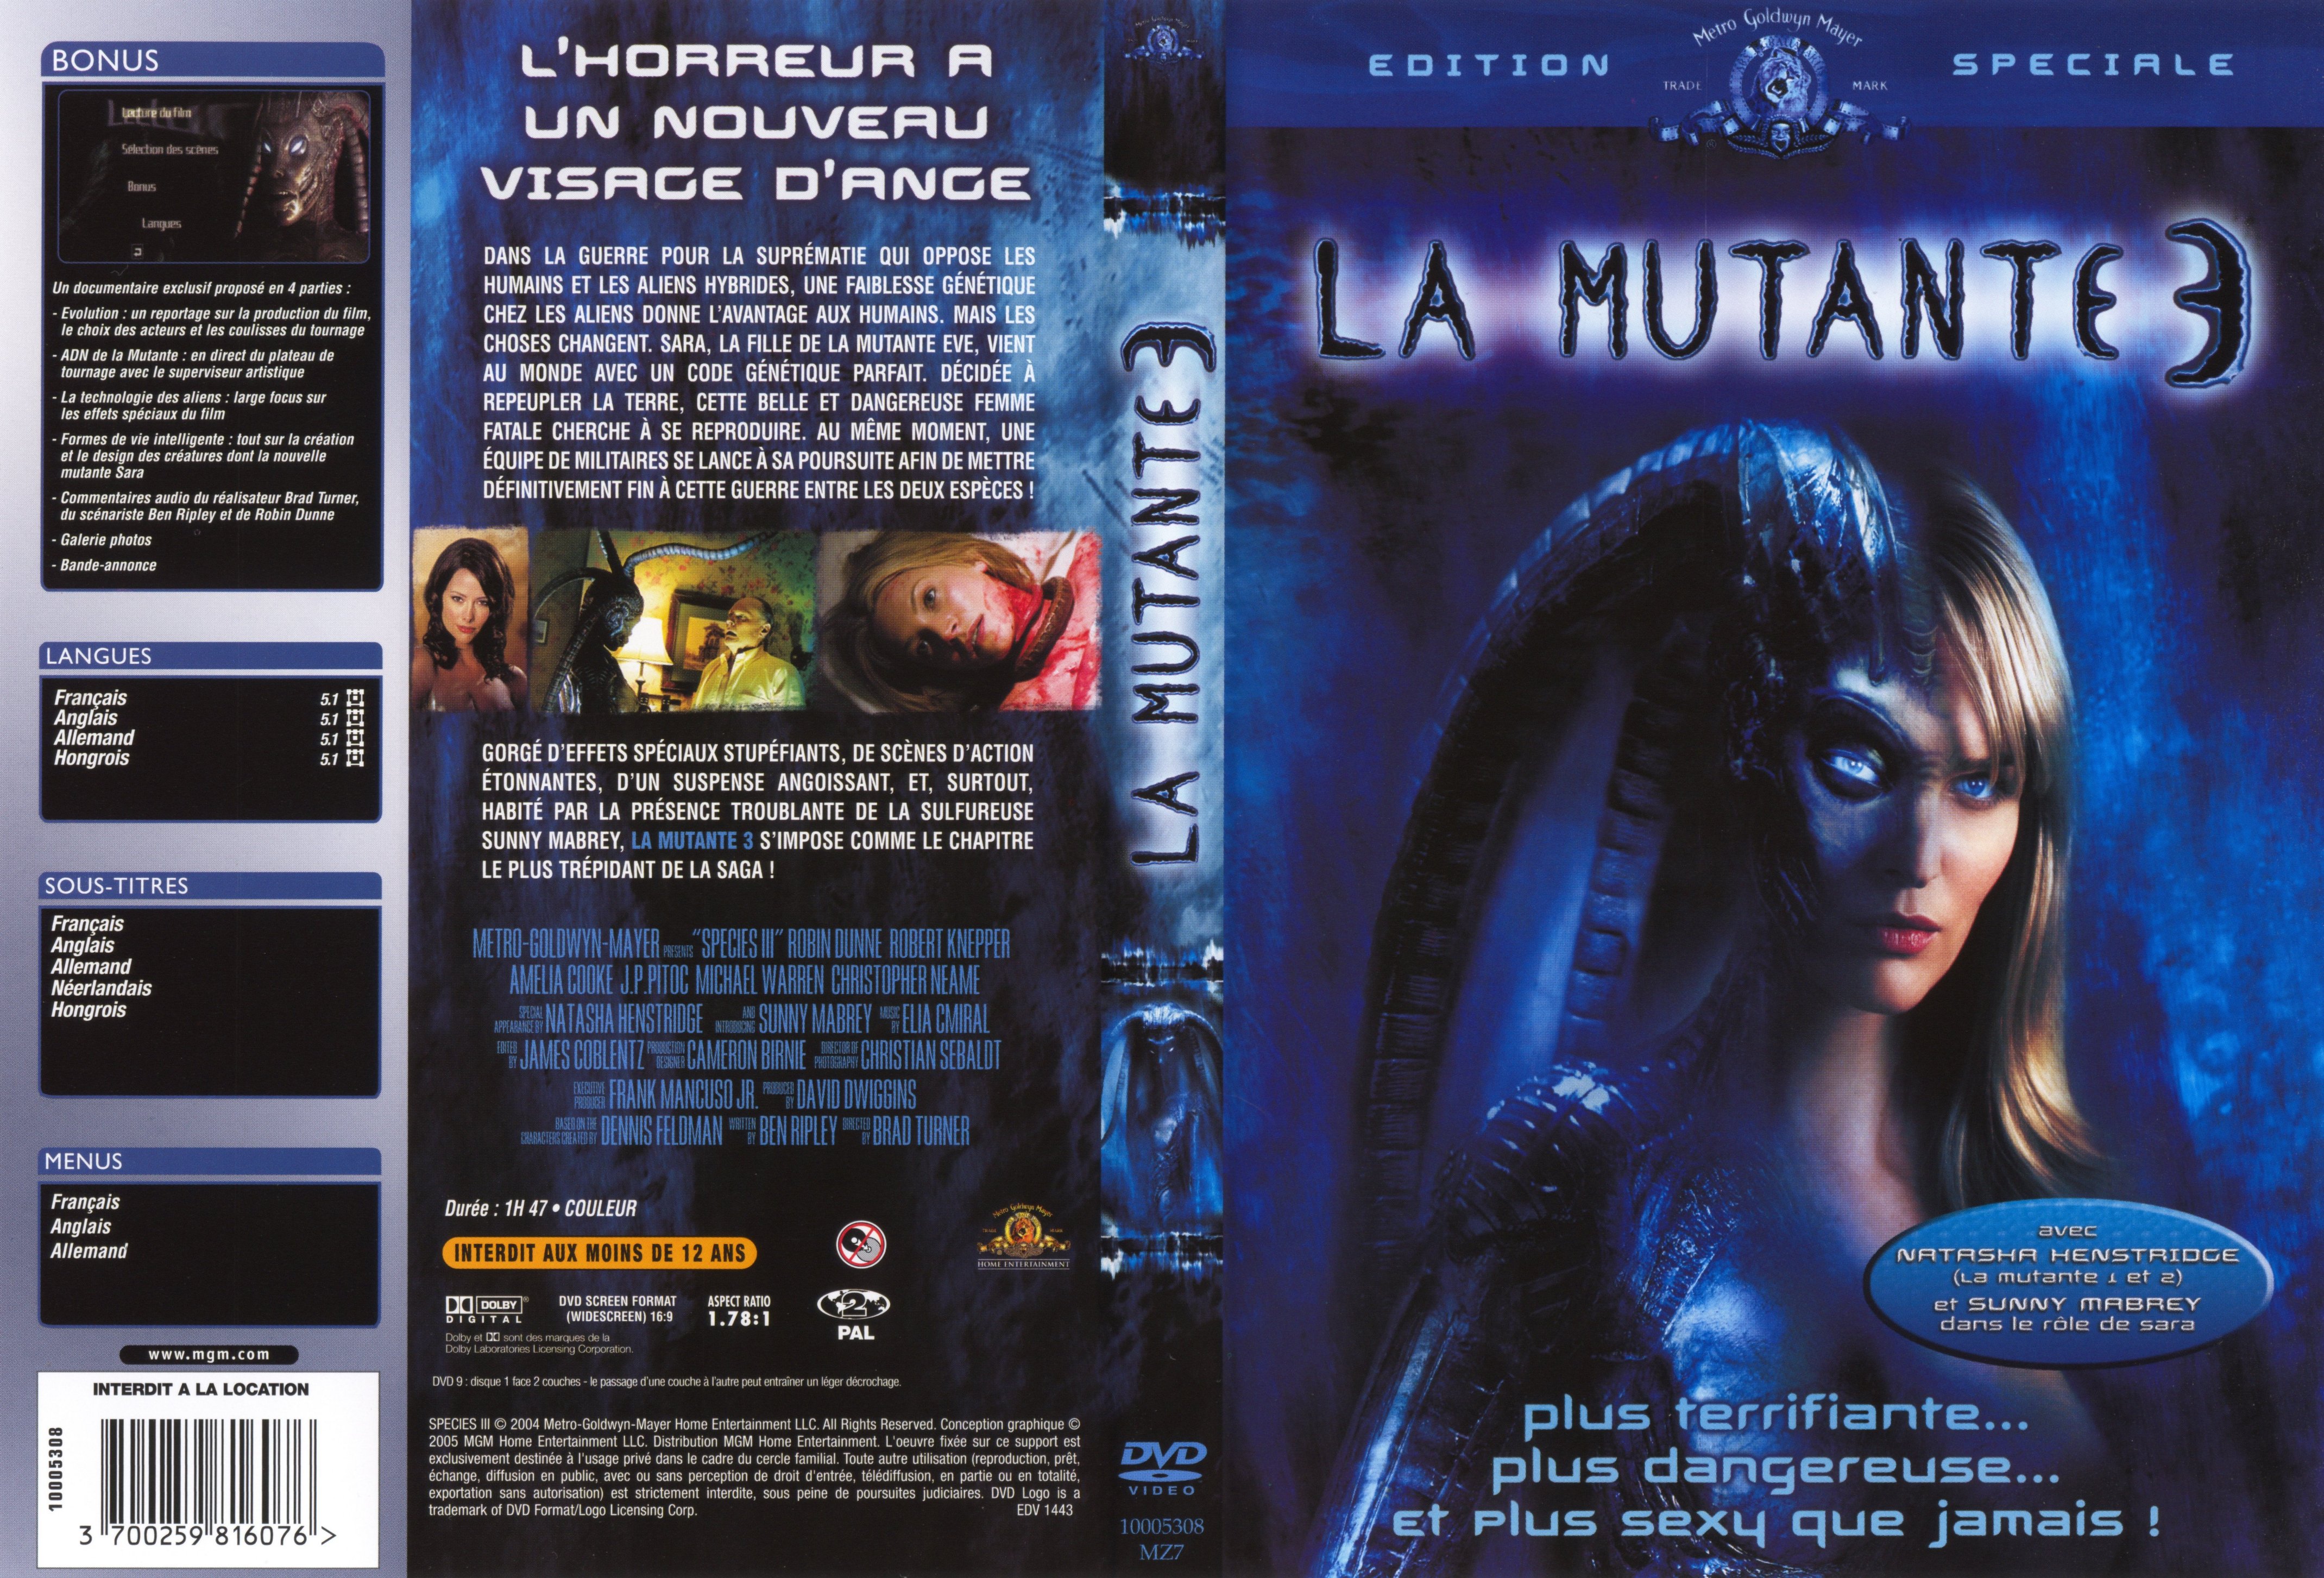 Jaquette DVD La mutante 3